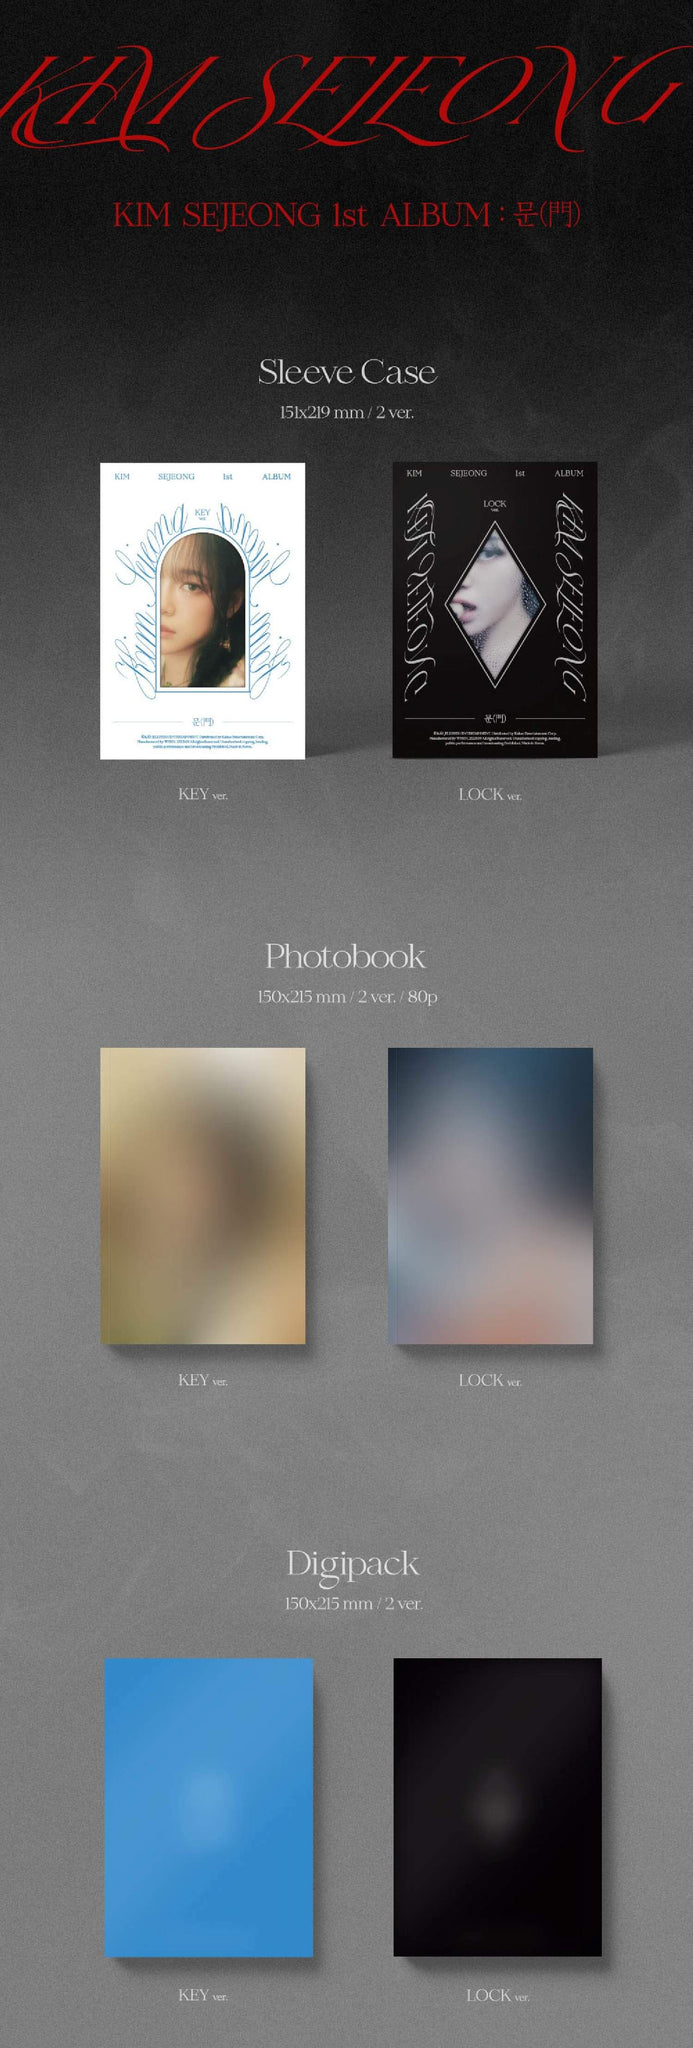 Kim Sejeong 1st Full Album Door Inclusions Sleeve Case Photobook Digipack